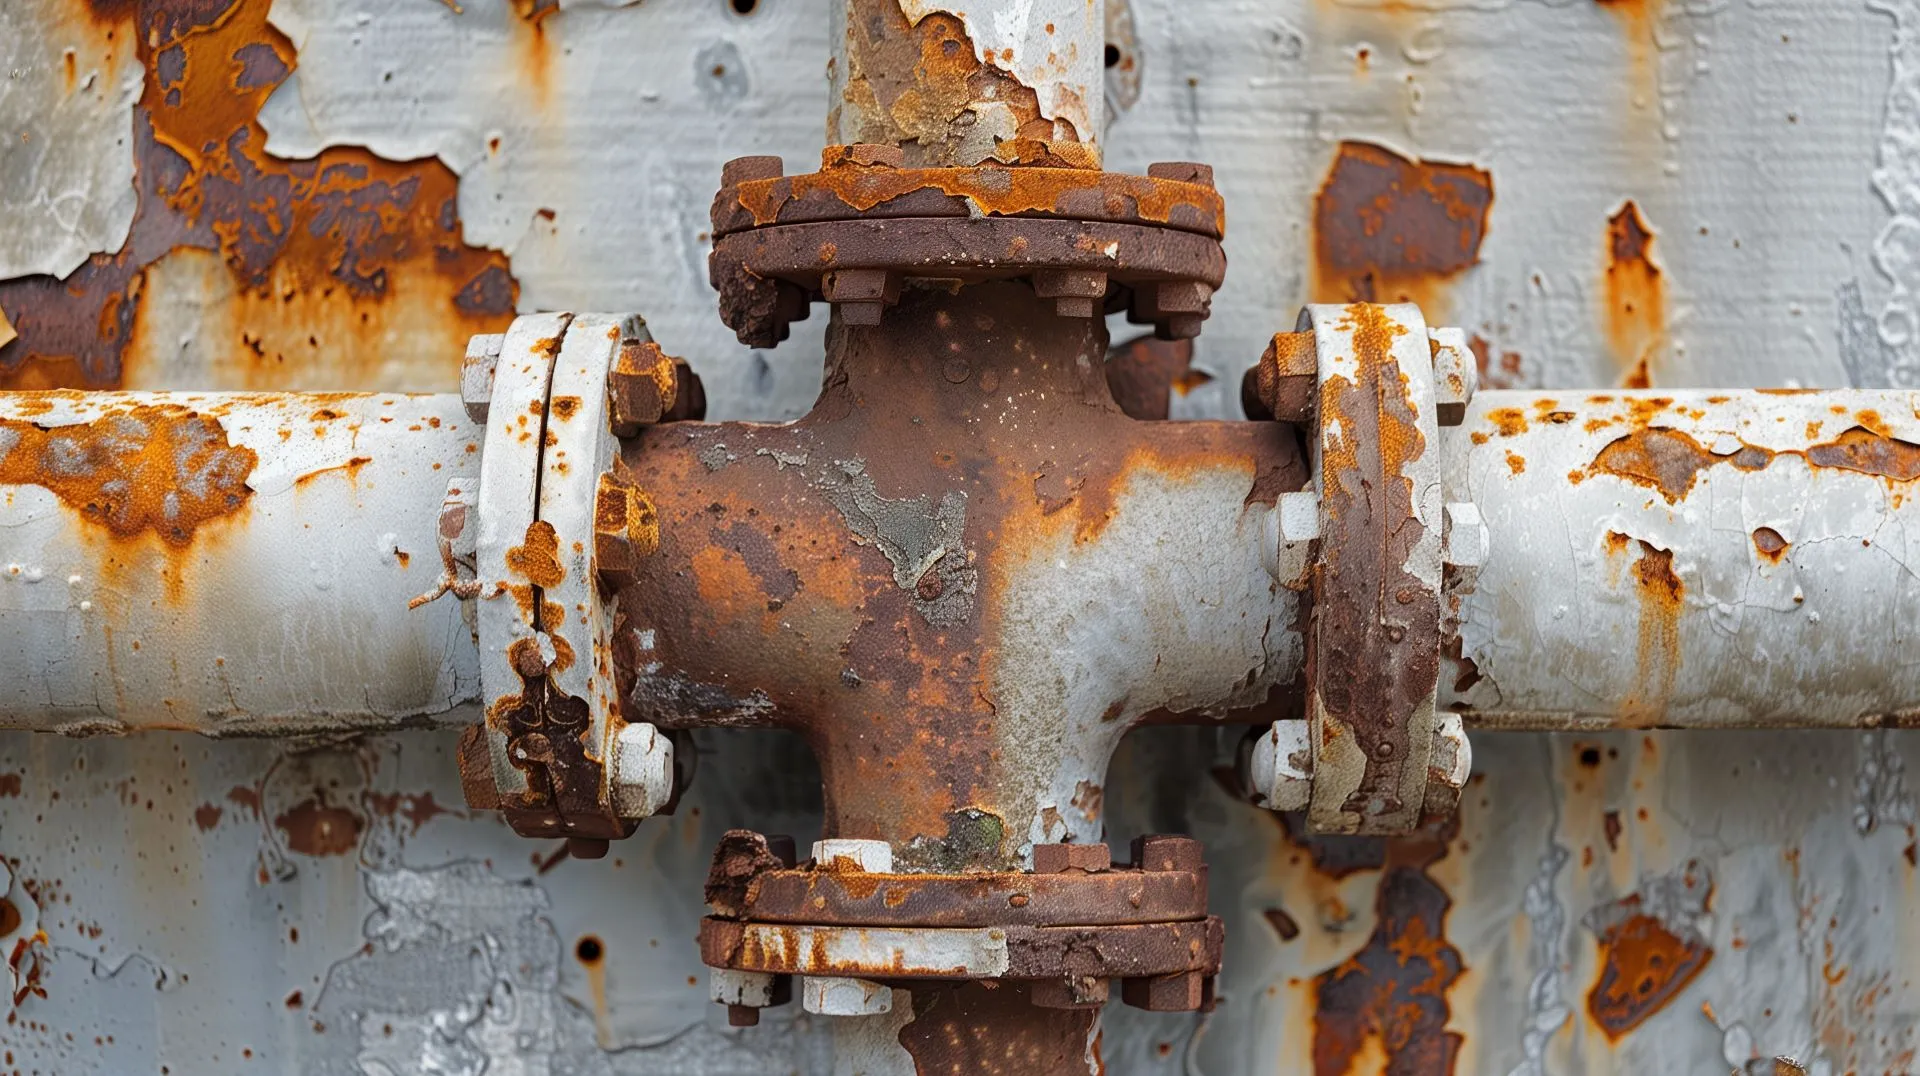 Galvanic Corrosion causes